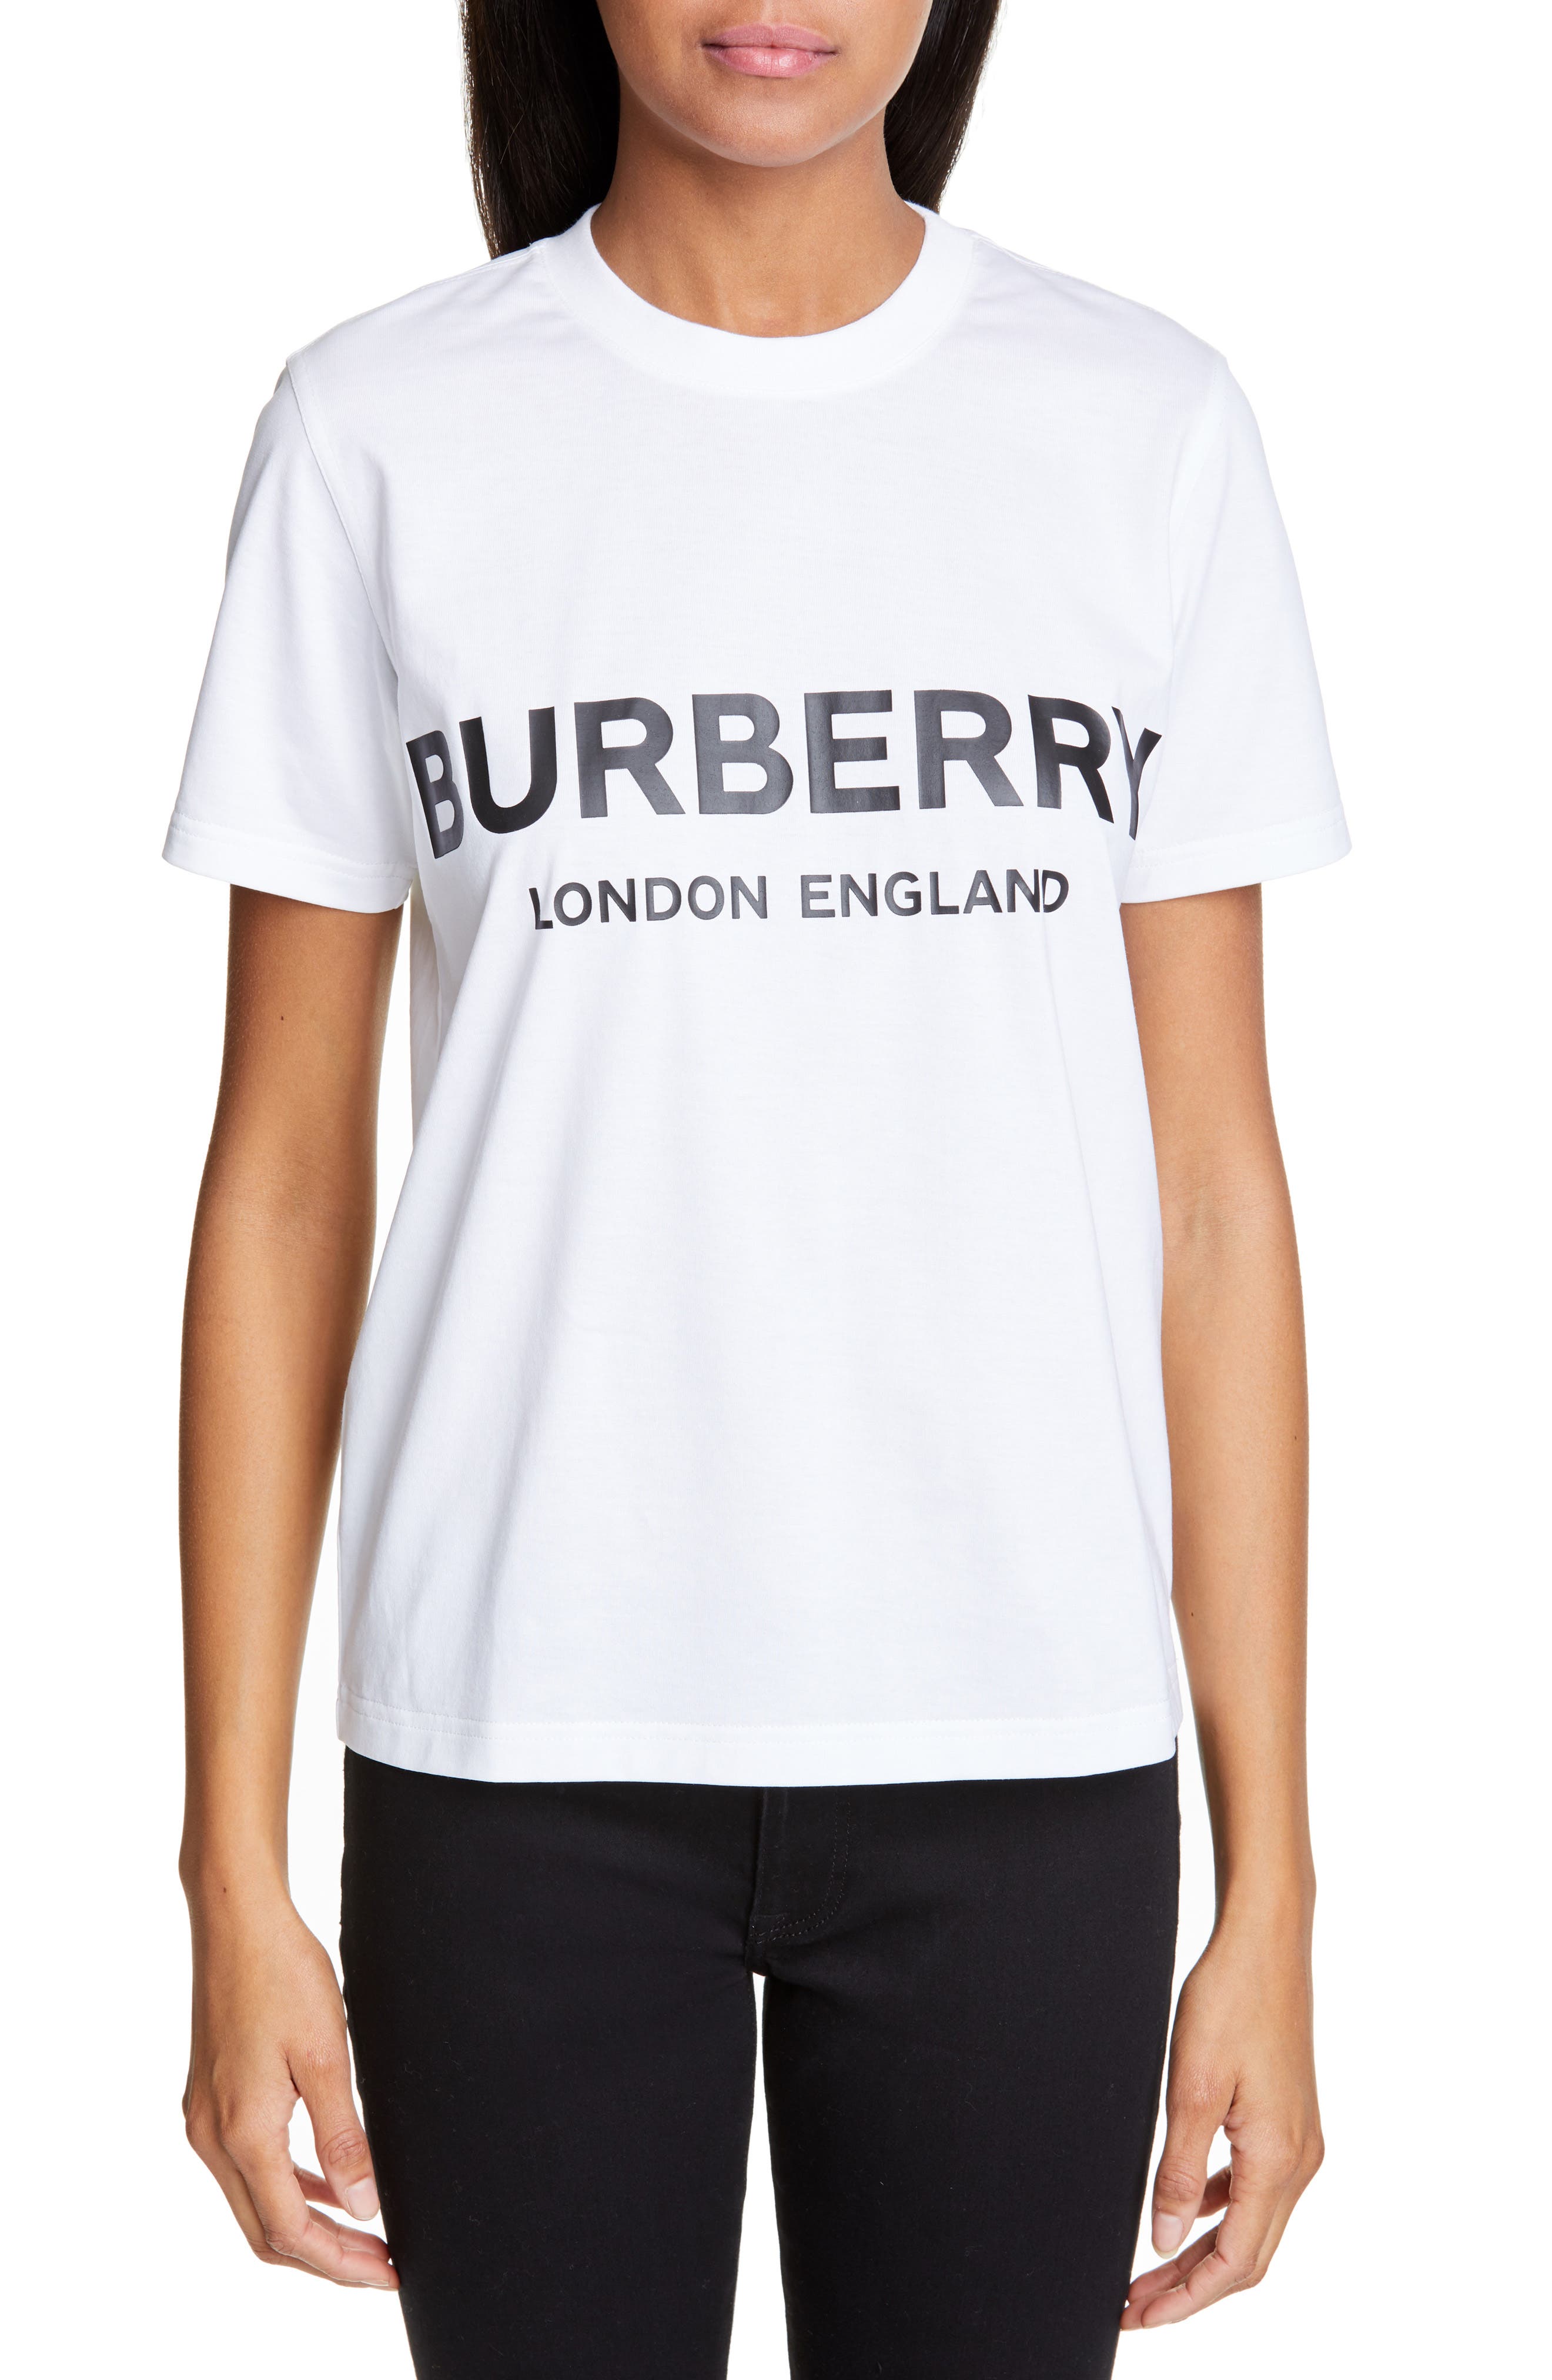 burberry womens shirts on sale